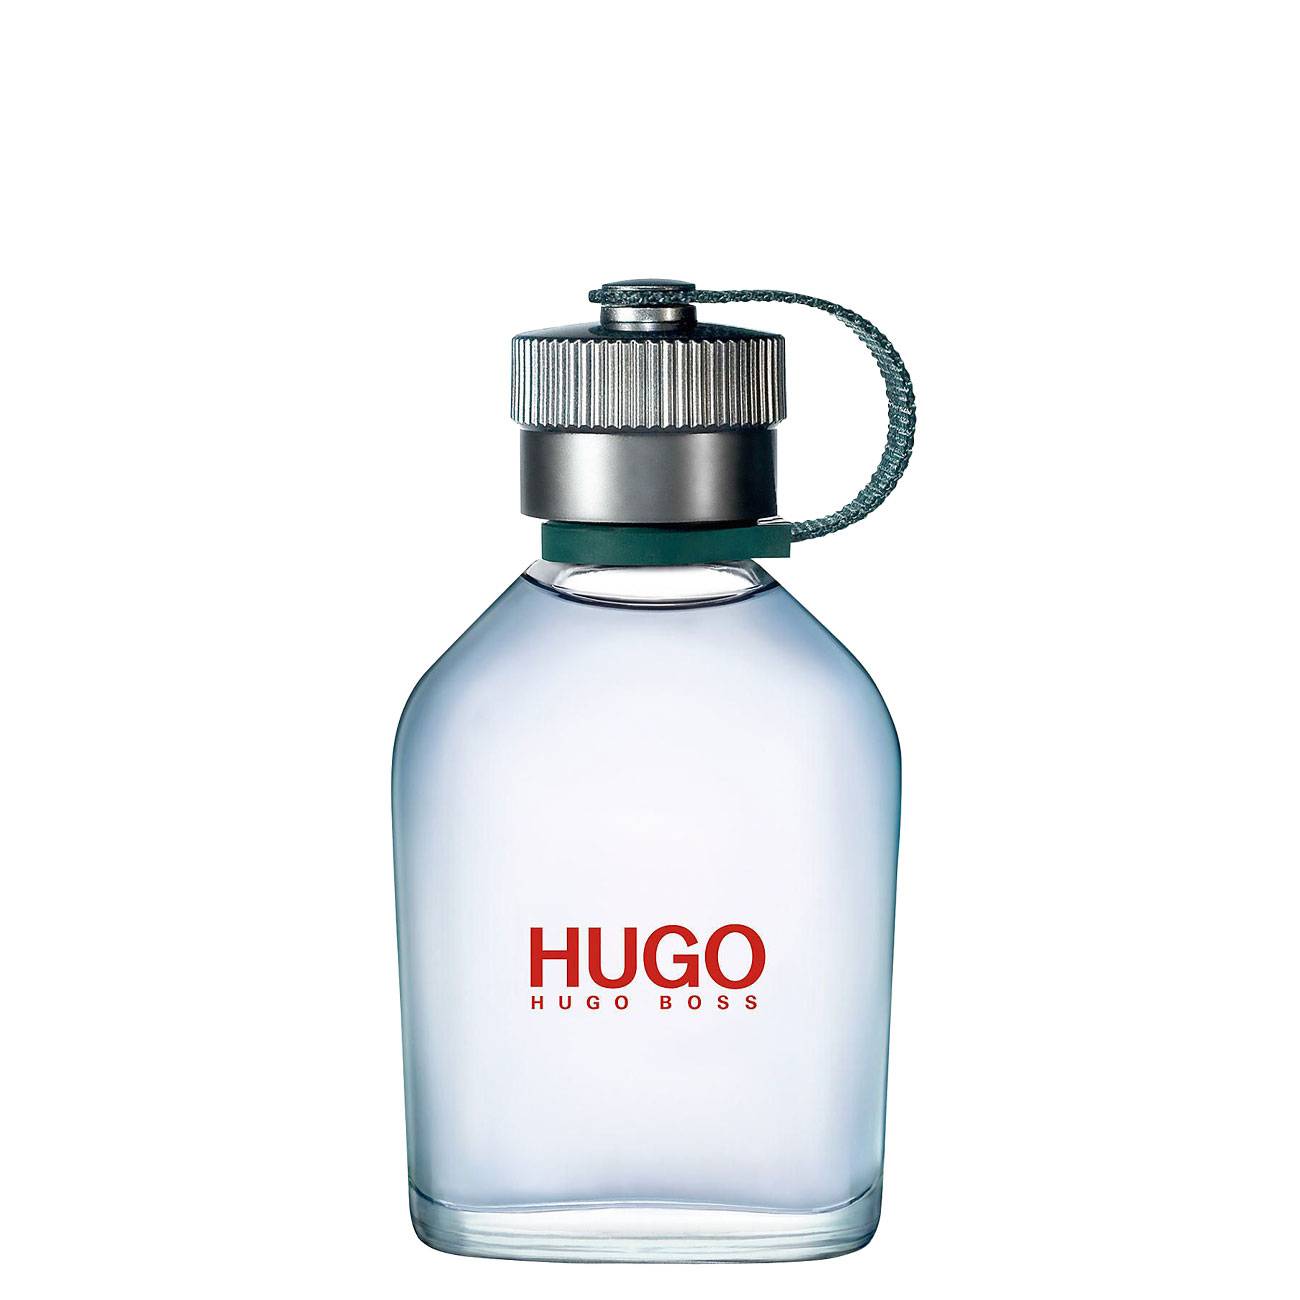 HUGO 75ml original Hugo Boss bestvalue